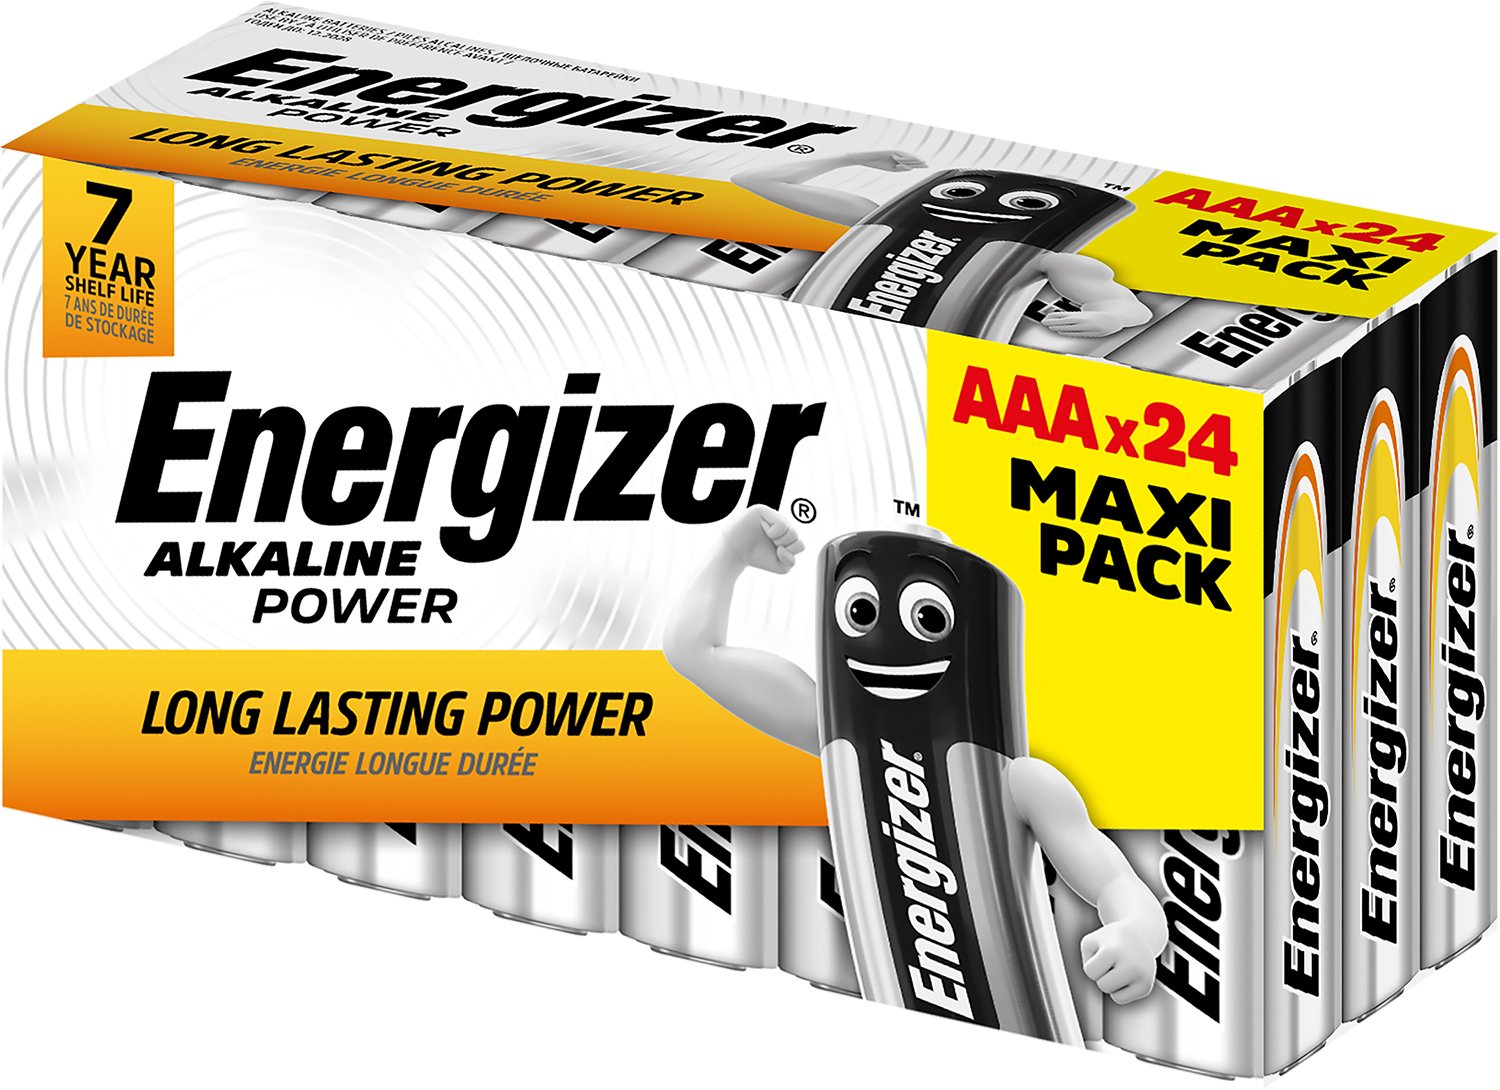 Energizer Alkaline Power 24 pack AAA Energizer Alkaline 24 Pack